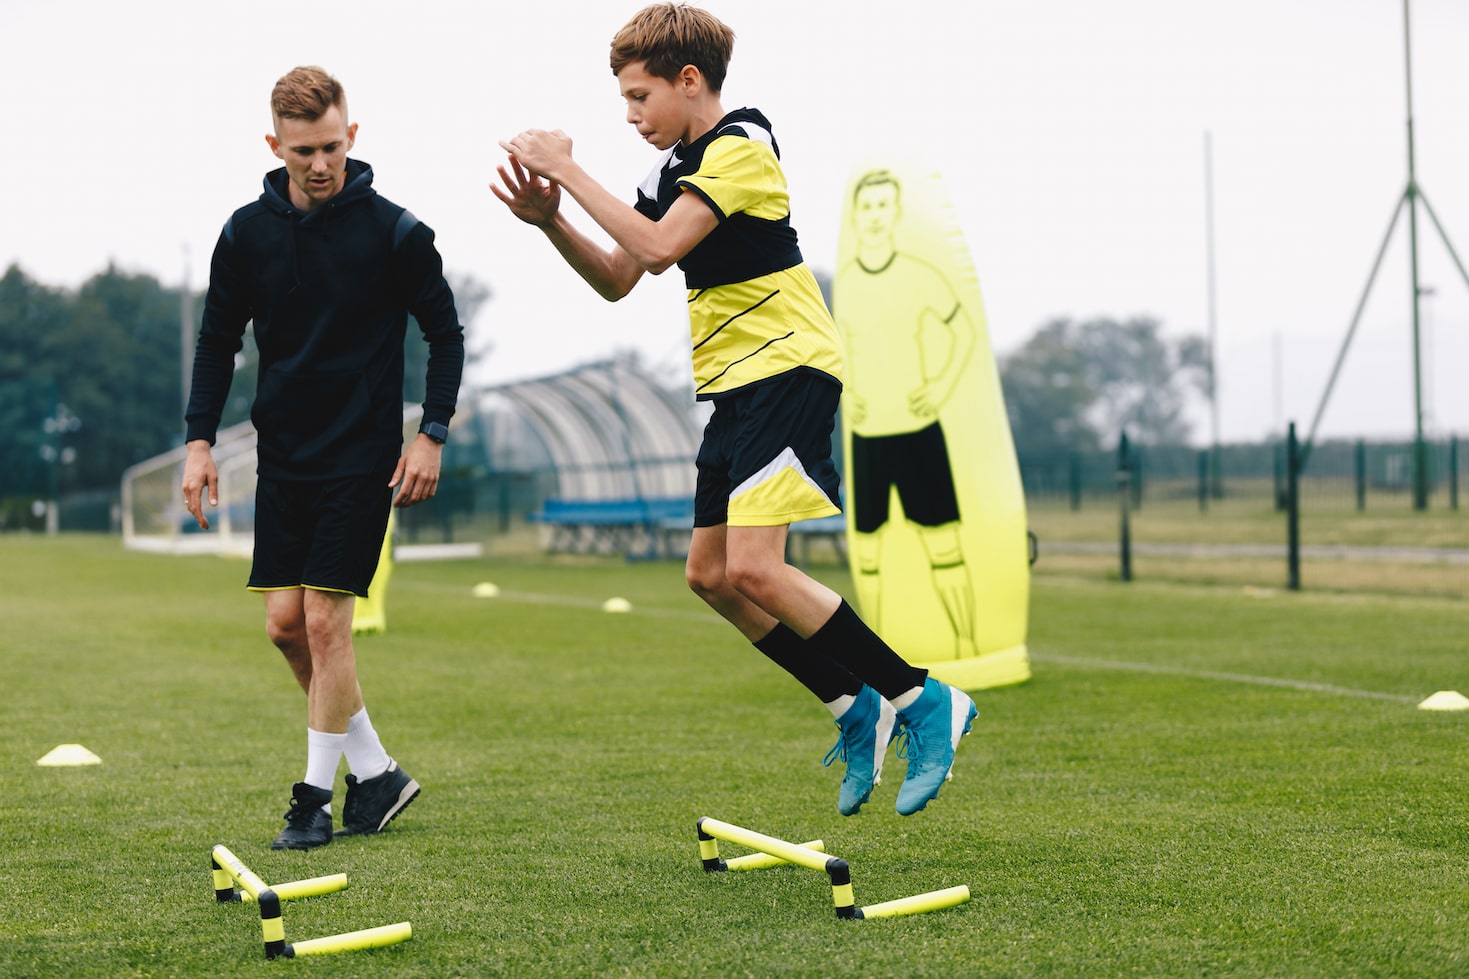 hurdles help improve agility in soccer